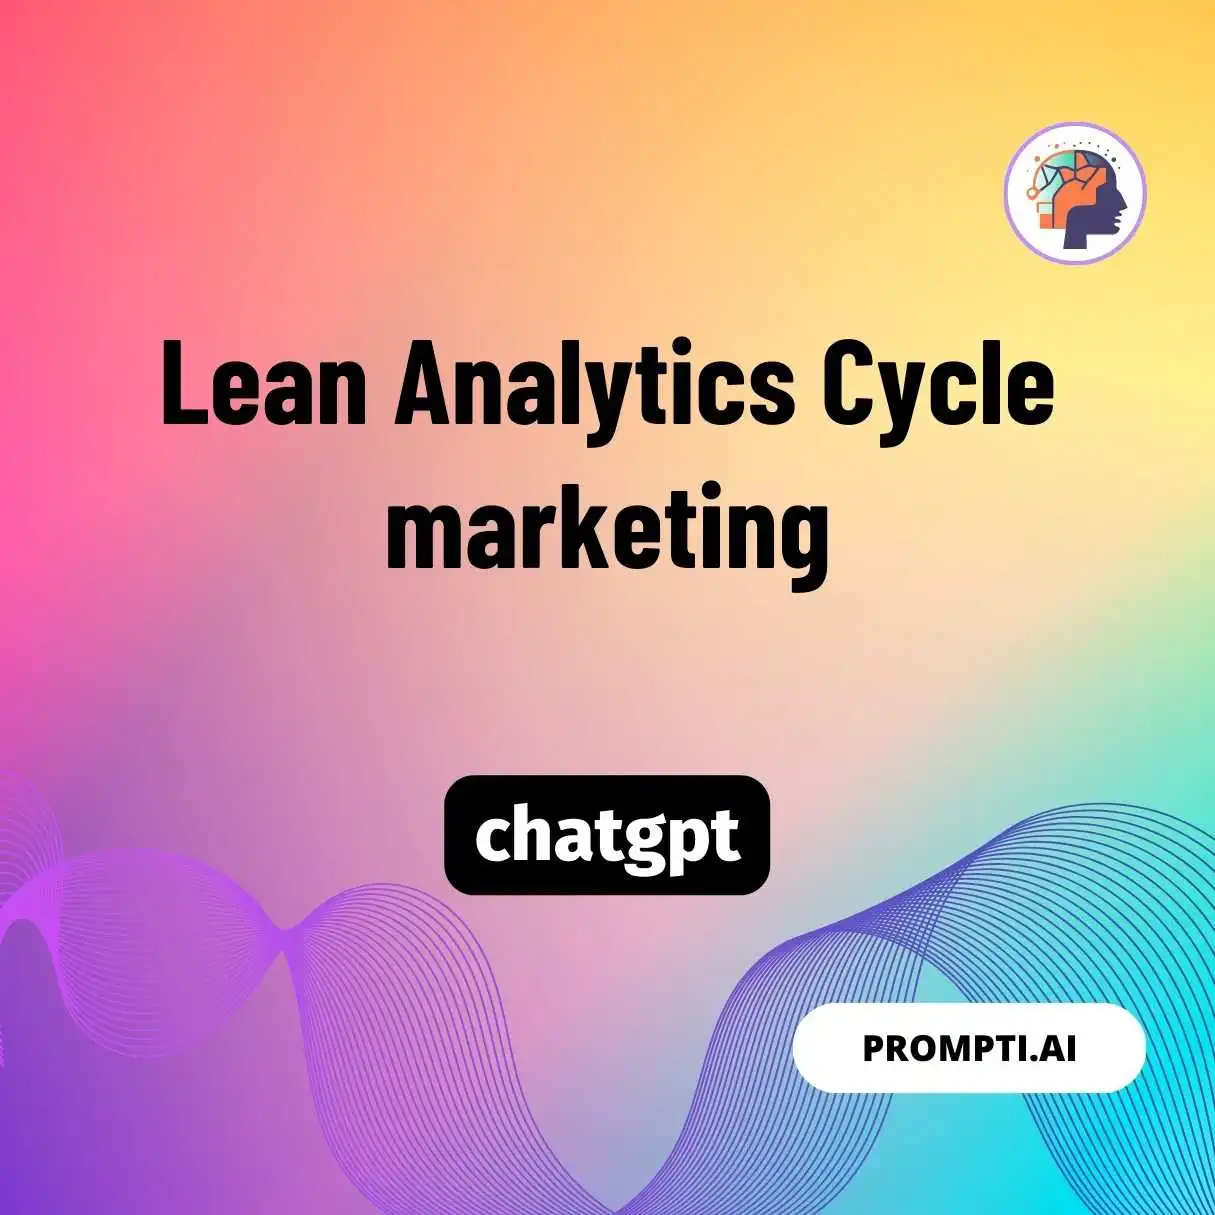 Lean Analytics Cycle marketing